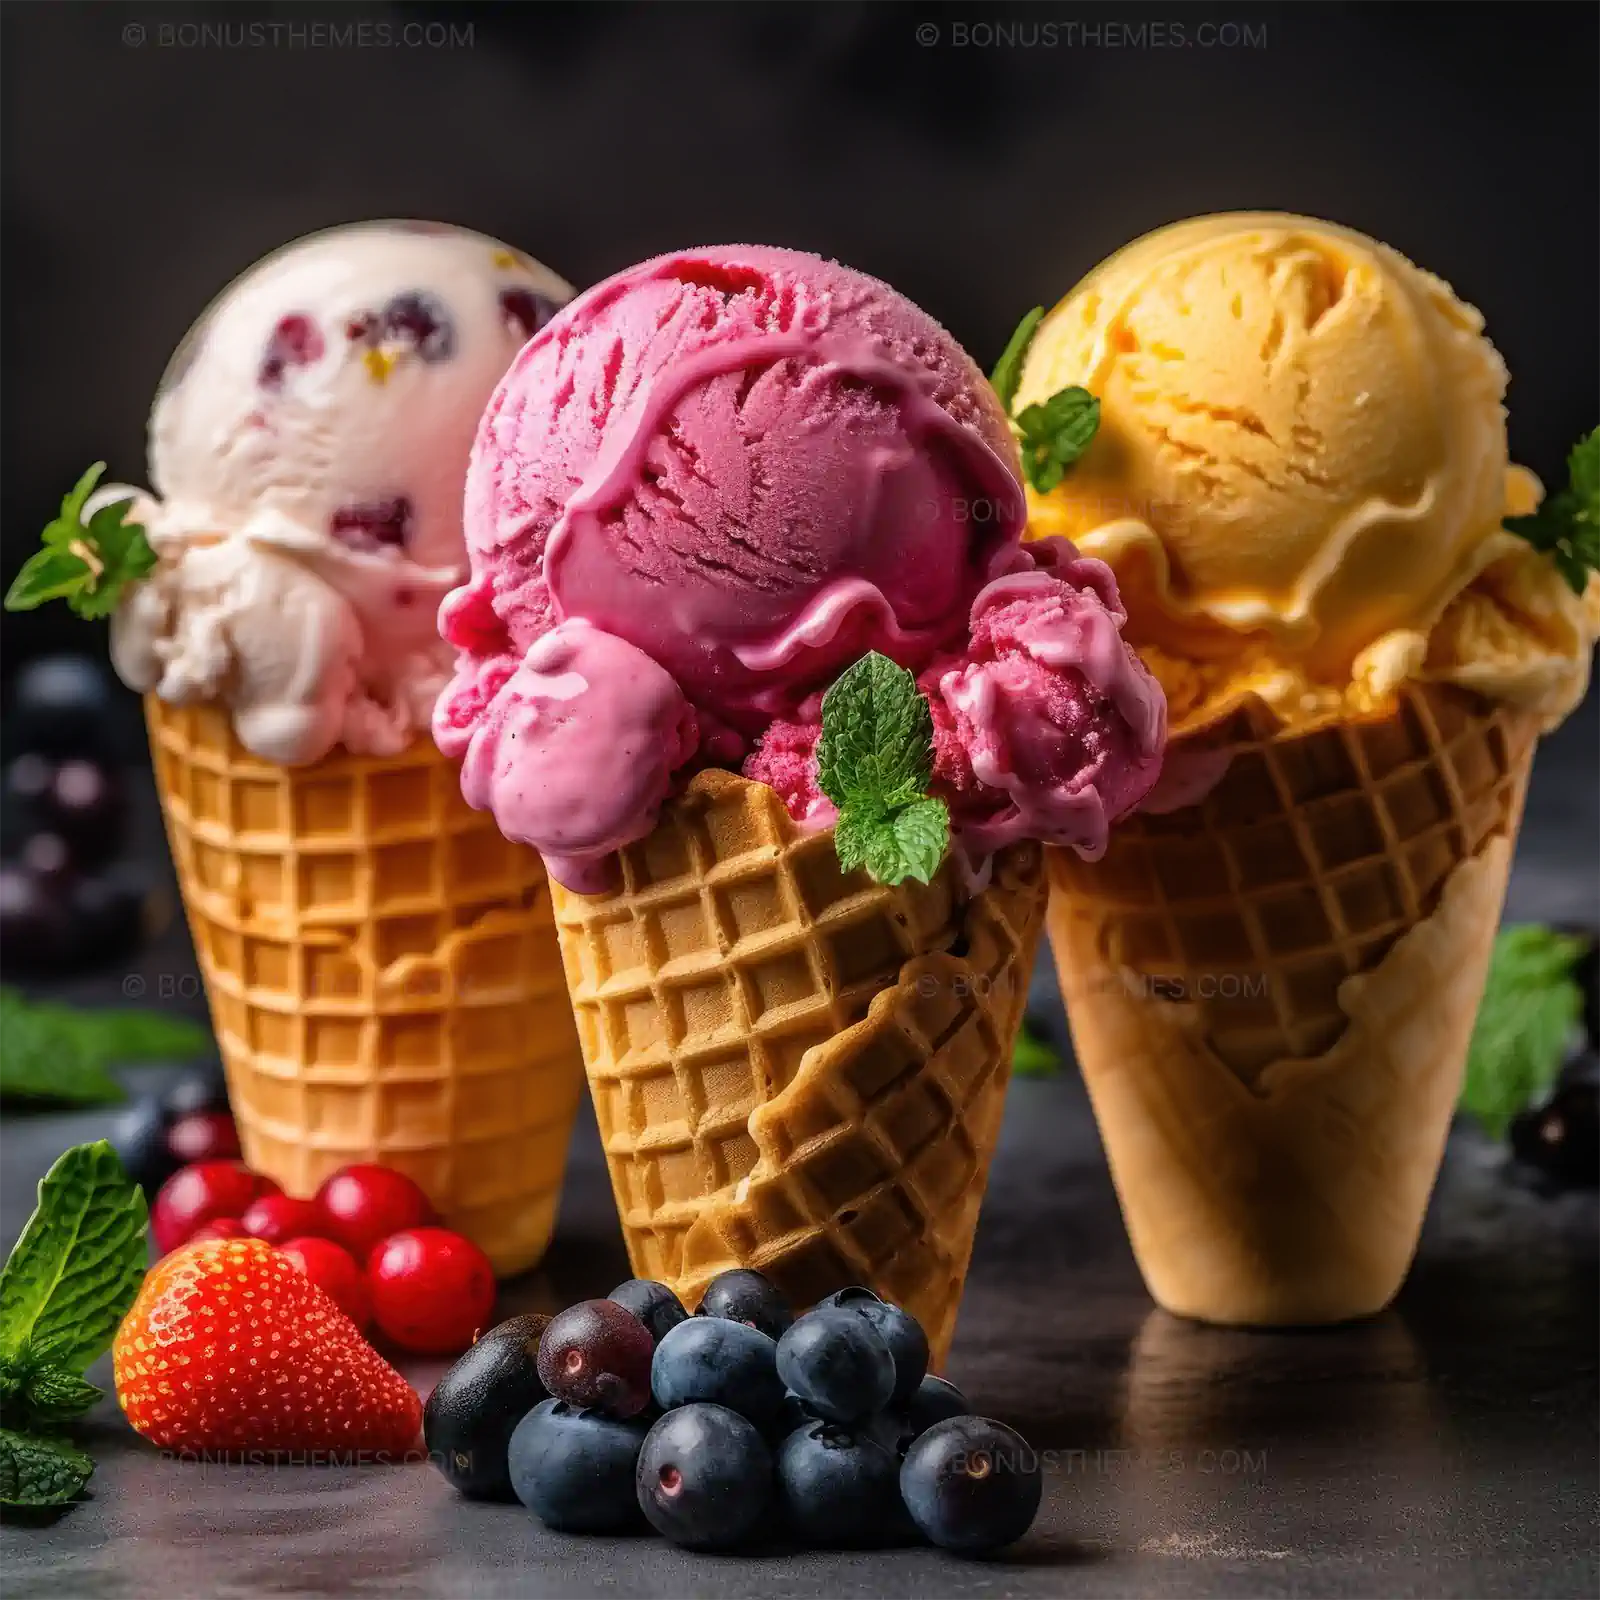 Ice cream cones with fruits